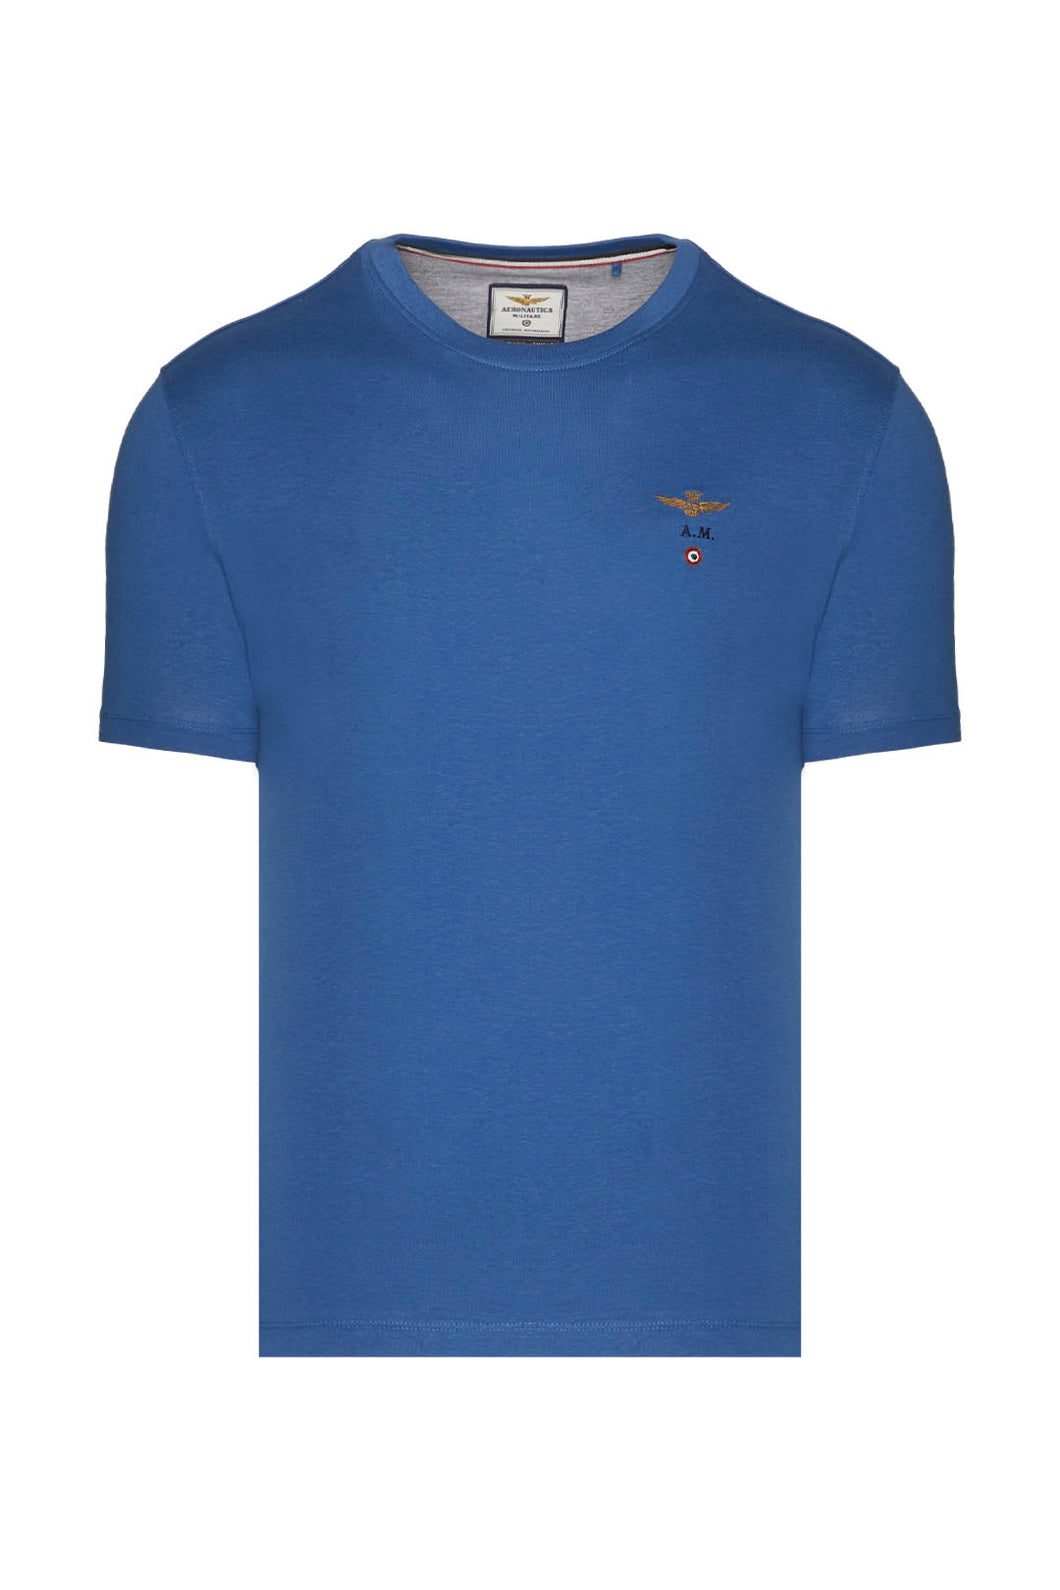 Aeronautica Militare T shirt Uomo Basic Blu Royal SC-20% manica Corta